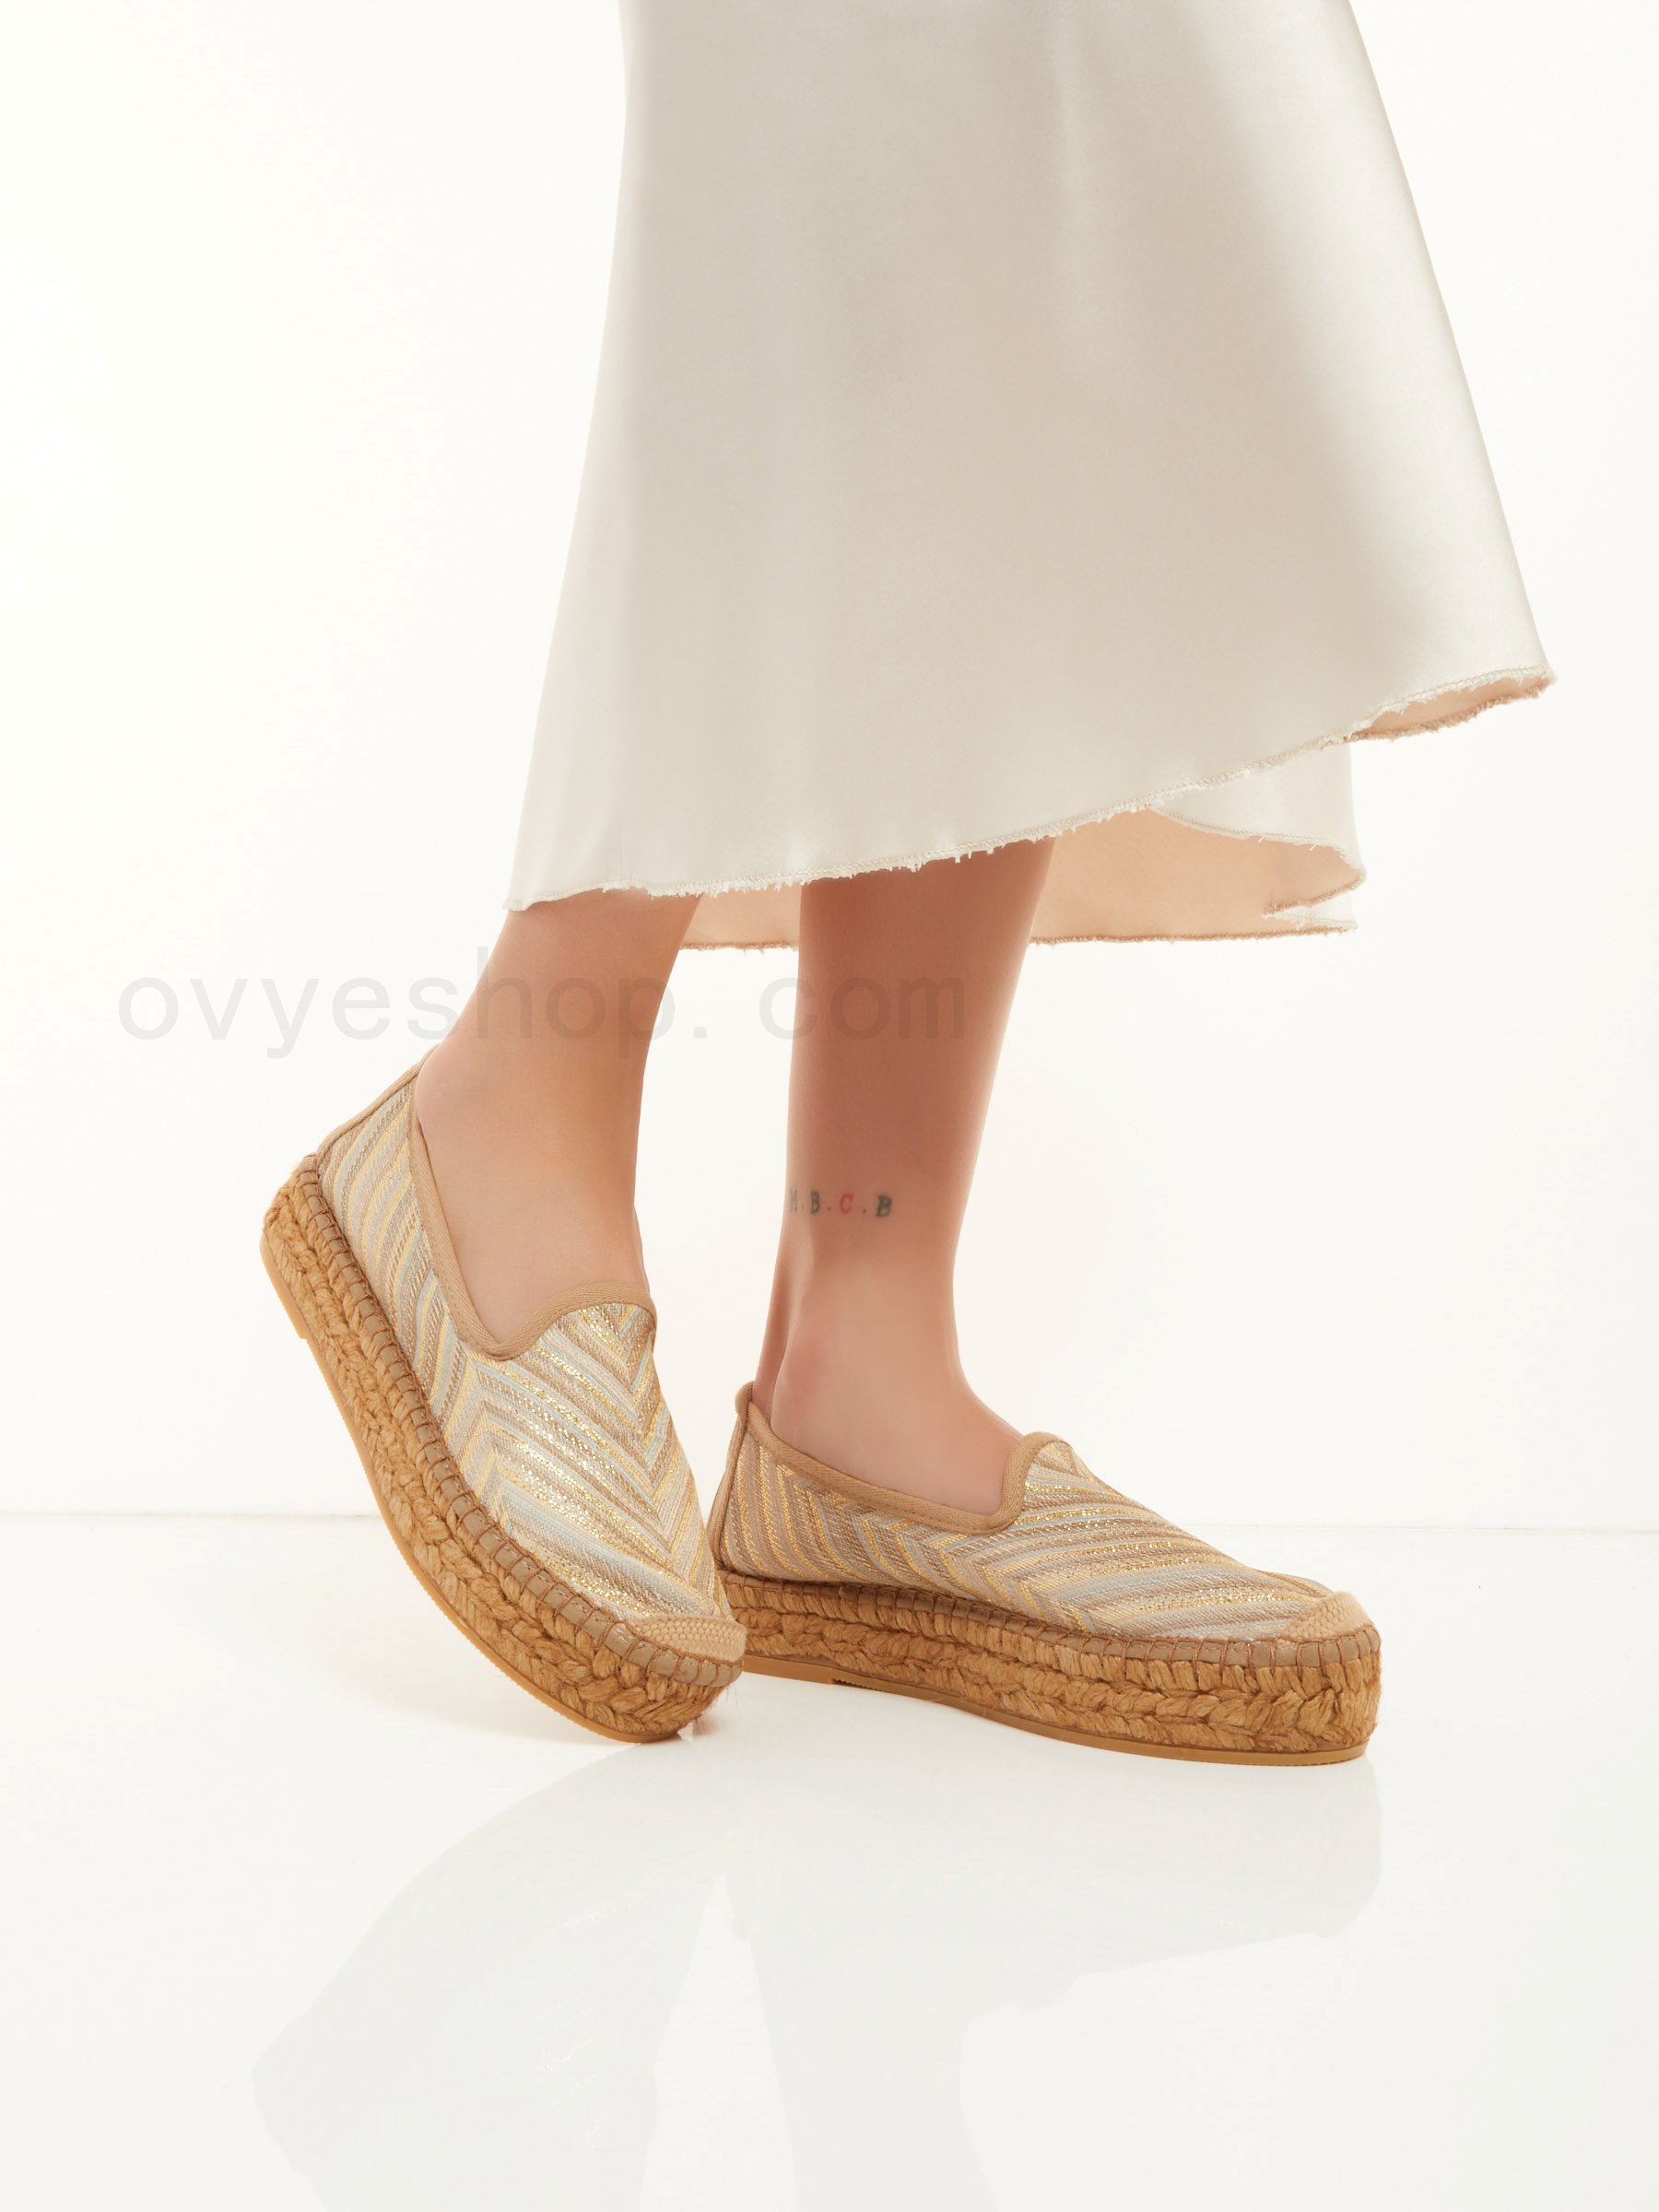 ovye scarpe Fabric Espadrillas F0817885-0790 85% Codice Sconto